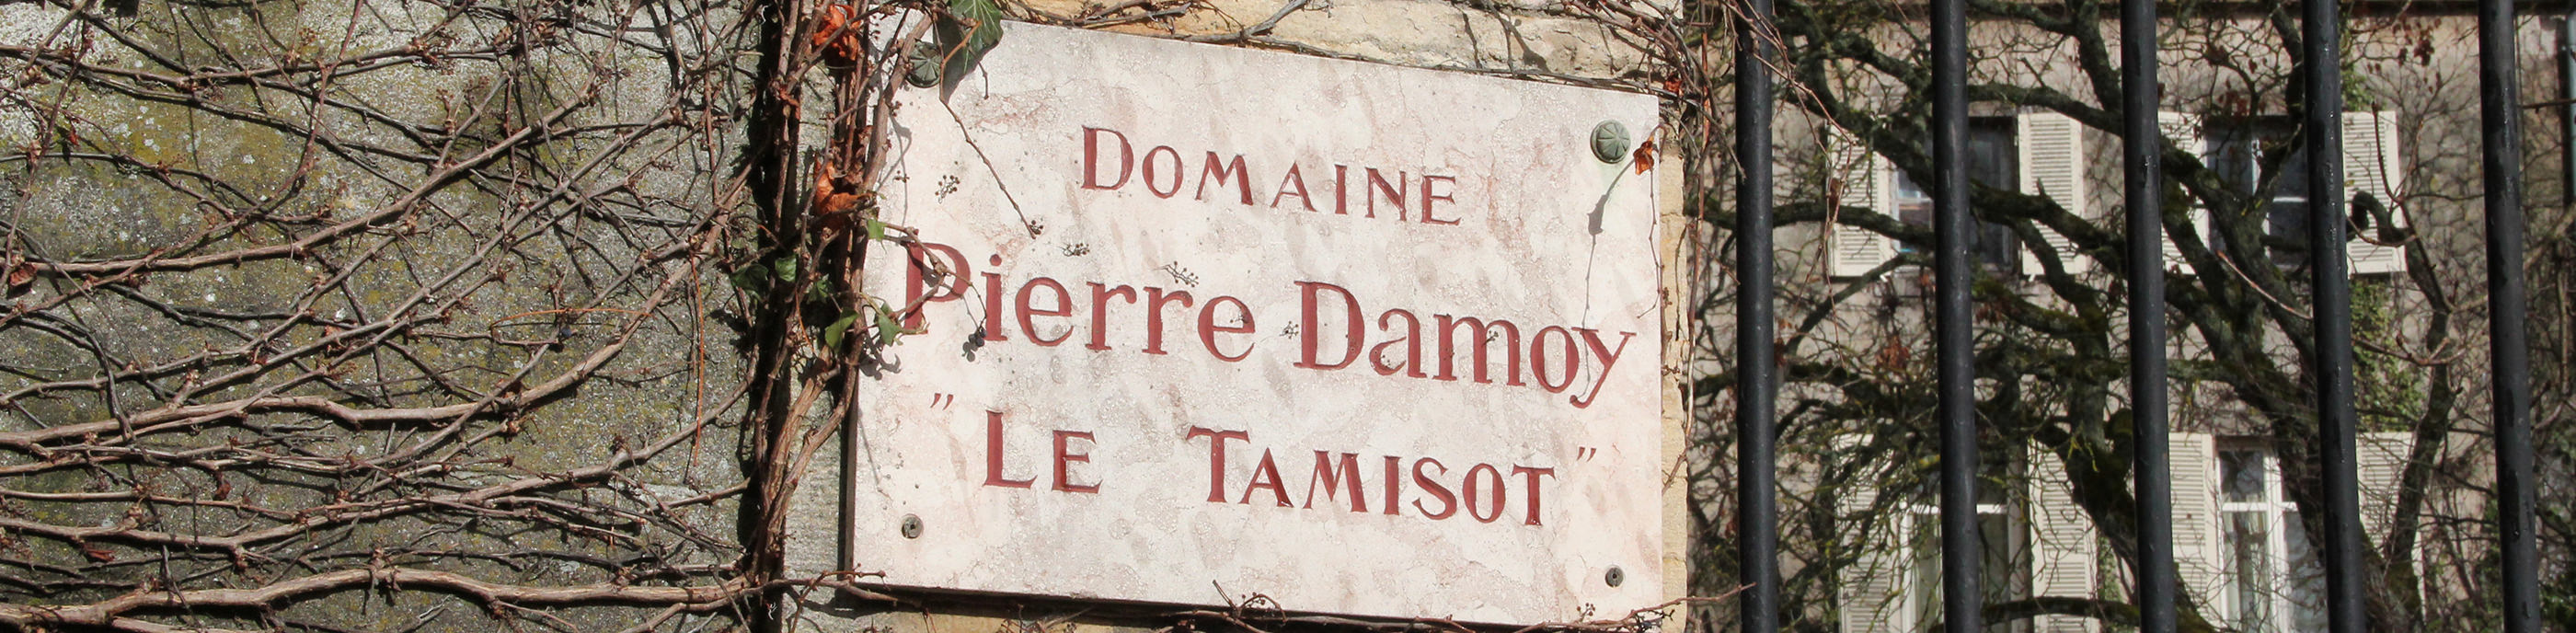 Domaine Pierre Damoy